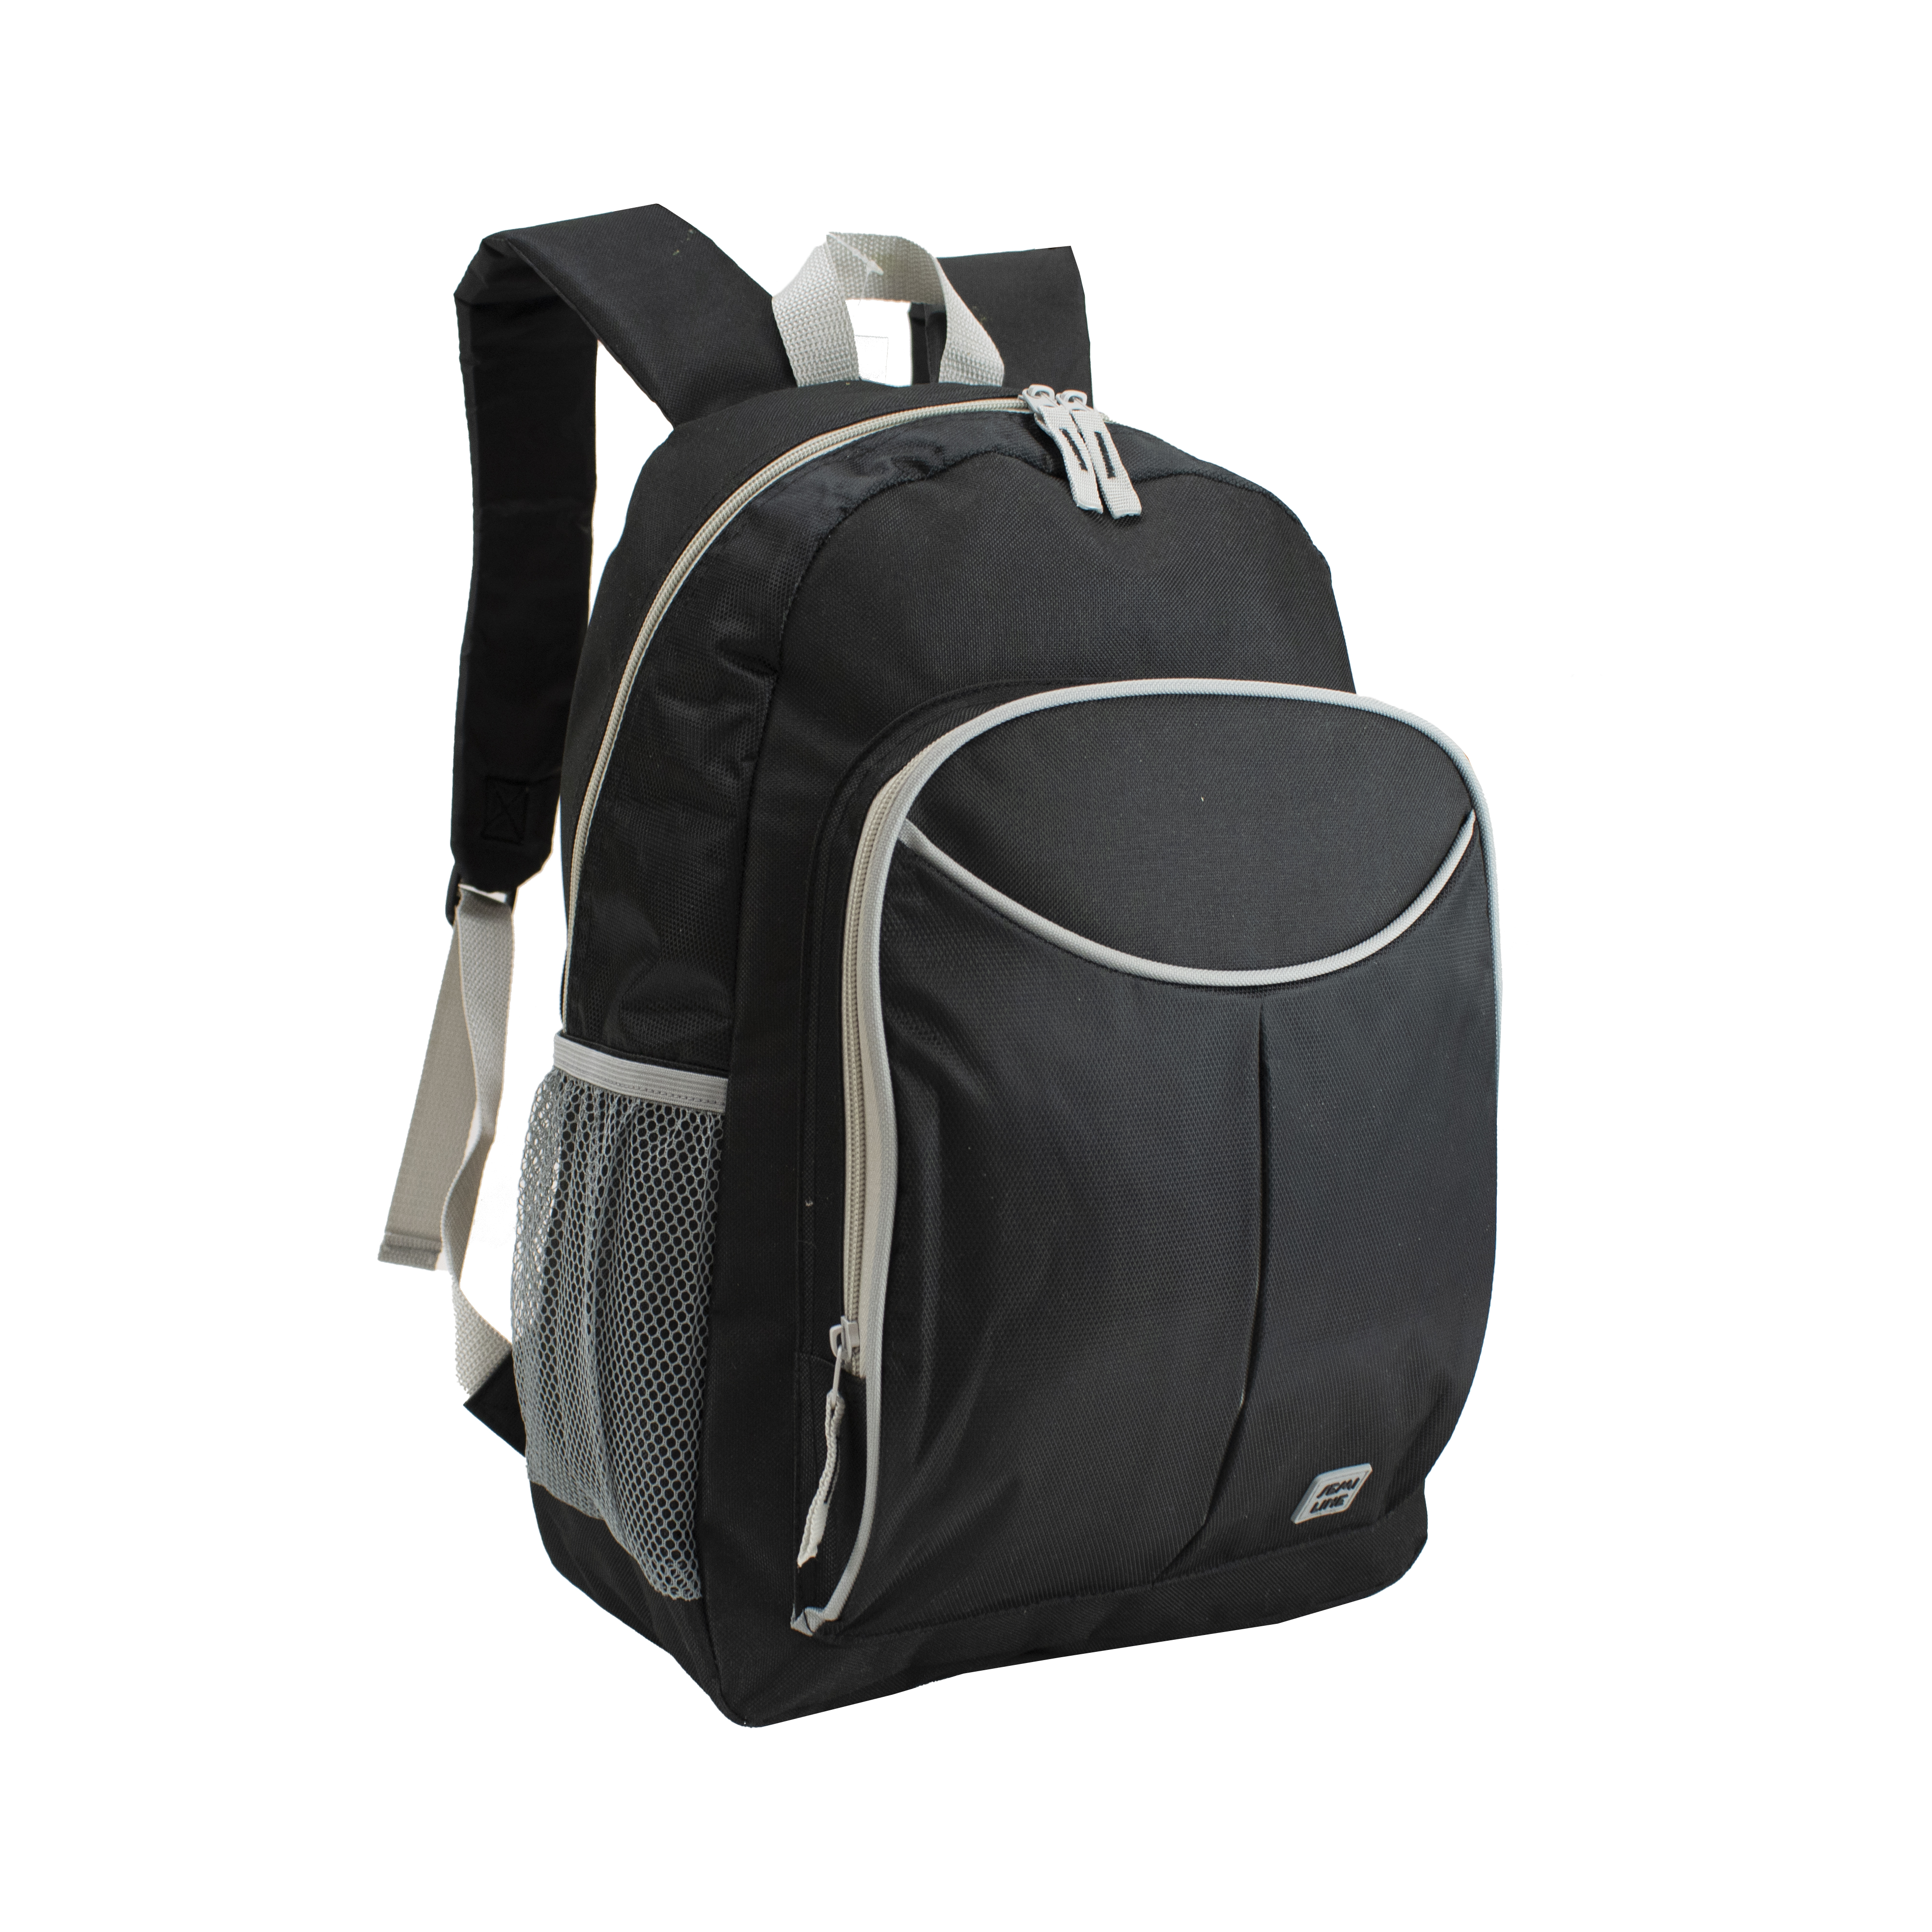 Semiline Unisex's Backpack J4916-1